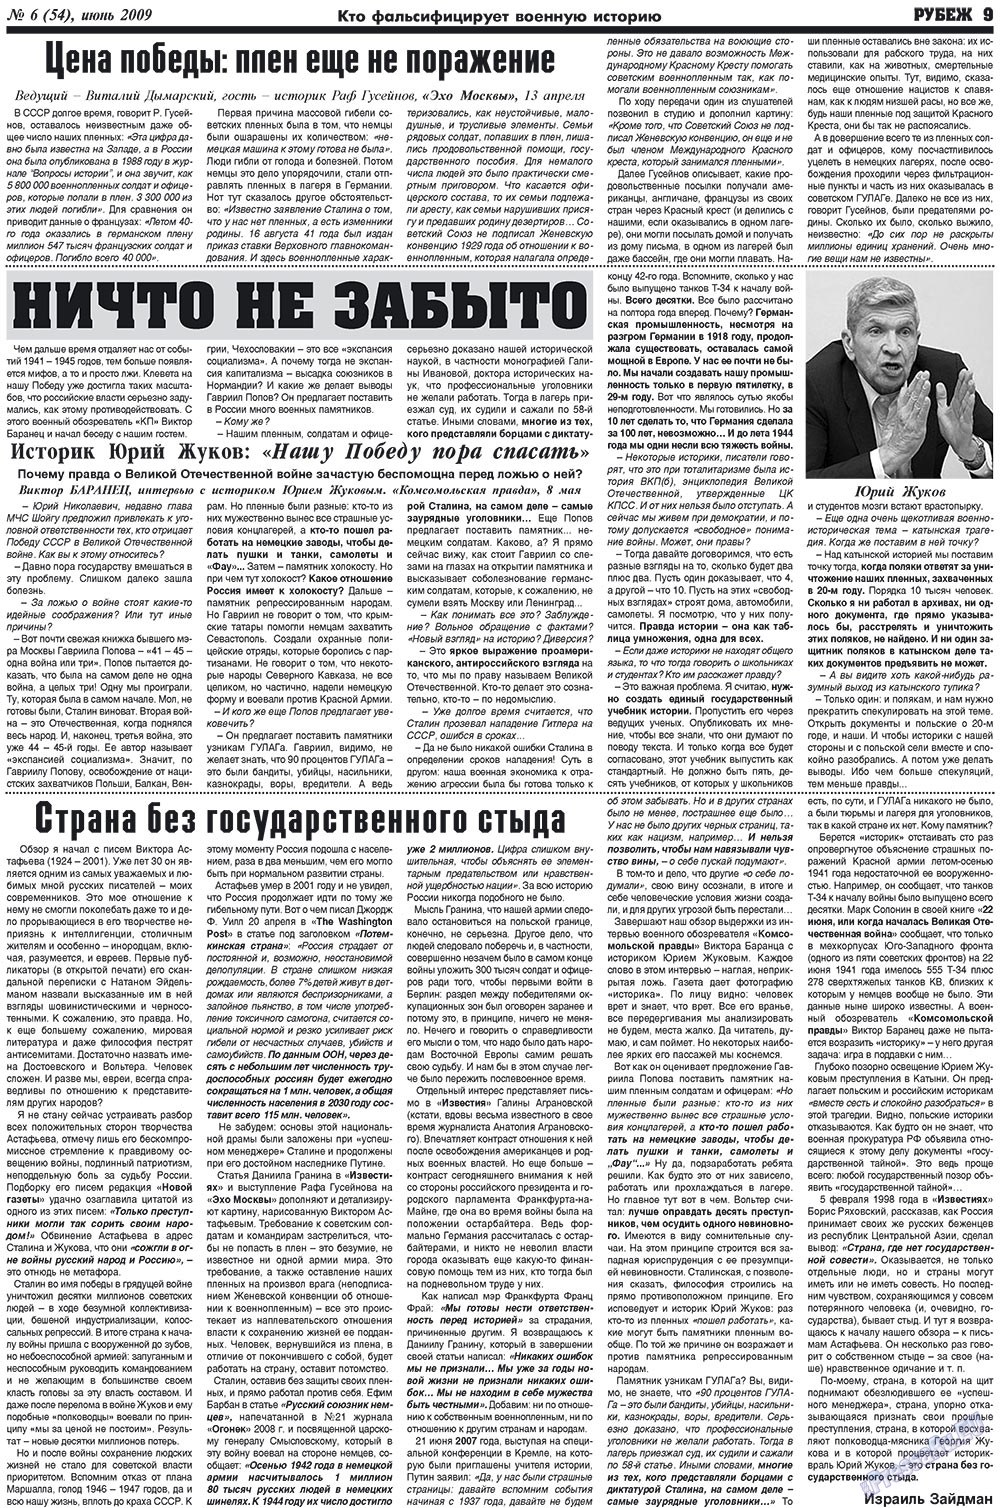 Рубеж, газета. 2009 №6 стр.9